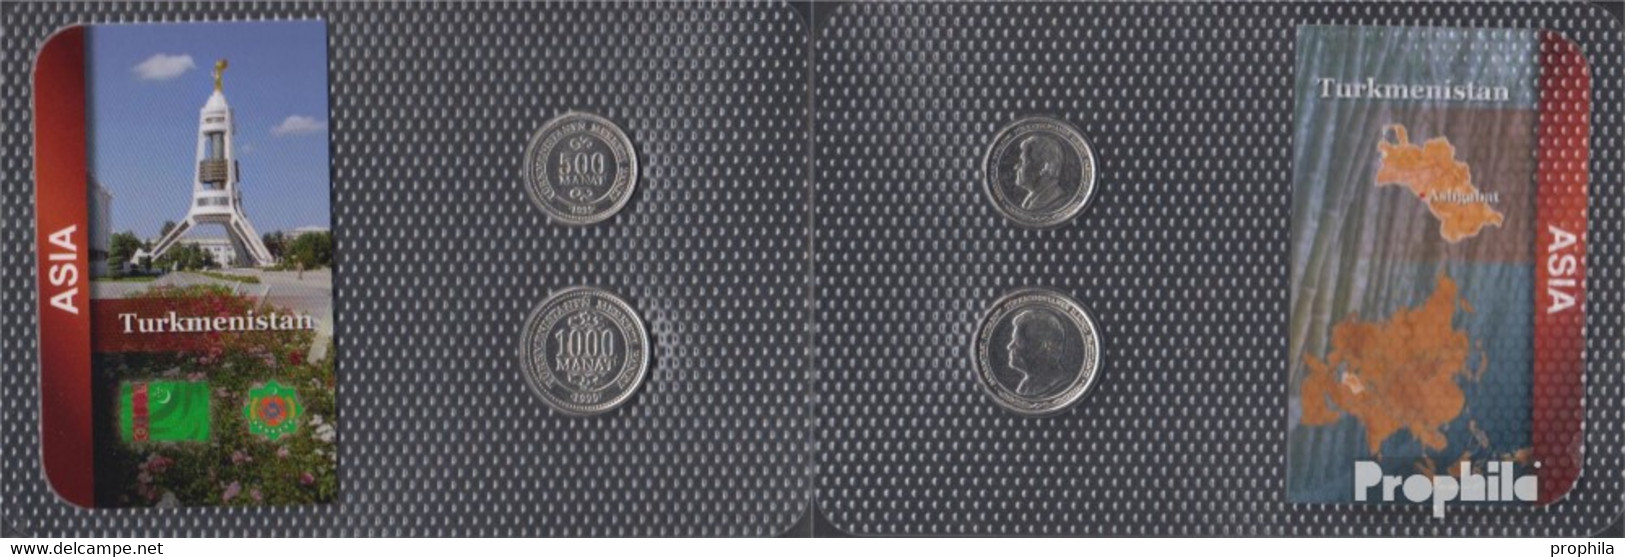 Turkmenistan 1999 Stgl./unzirkuliert Kursmünzen Stgl./unzirkuliert 1999 500 Bis 1.000 Manat - Turkménistan